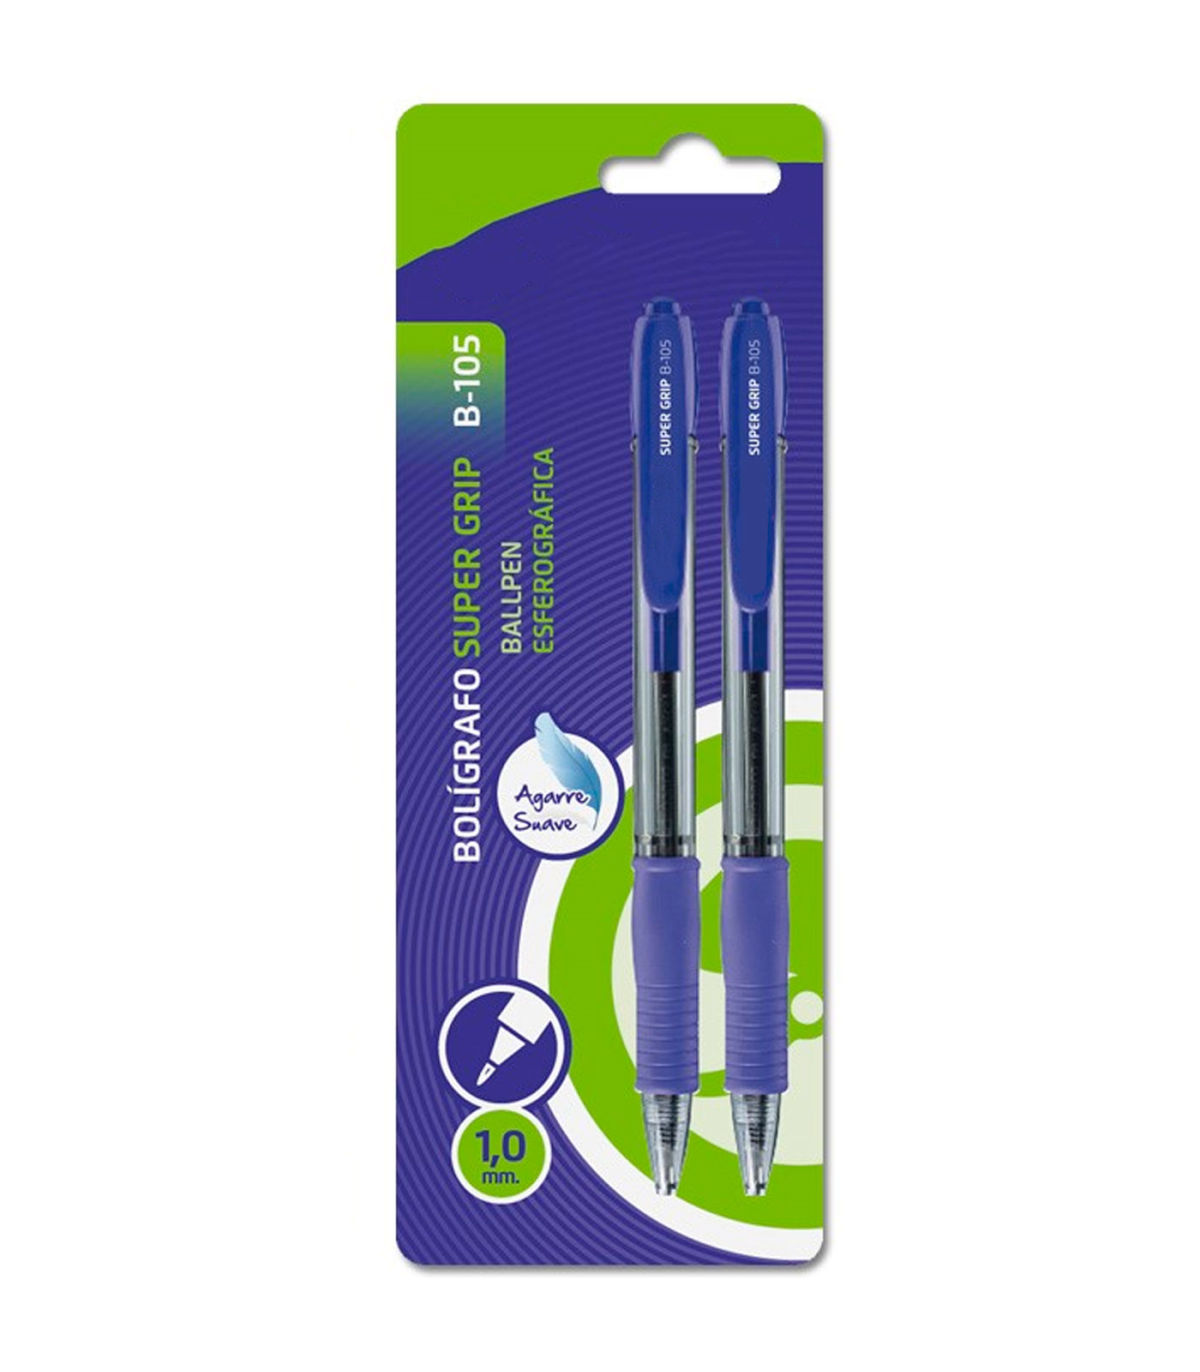 Tradineur - Pack de 6 bolígrafos retráctiles - Fabricado en plástico PVC -  Tinta aceite - Punta de 1mm - Color Surtido.